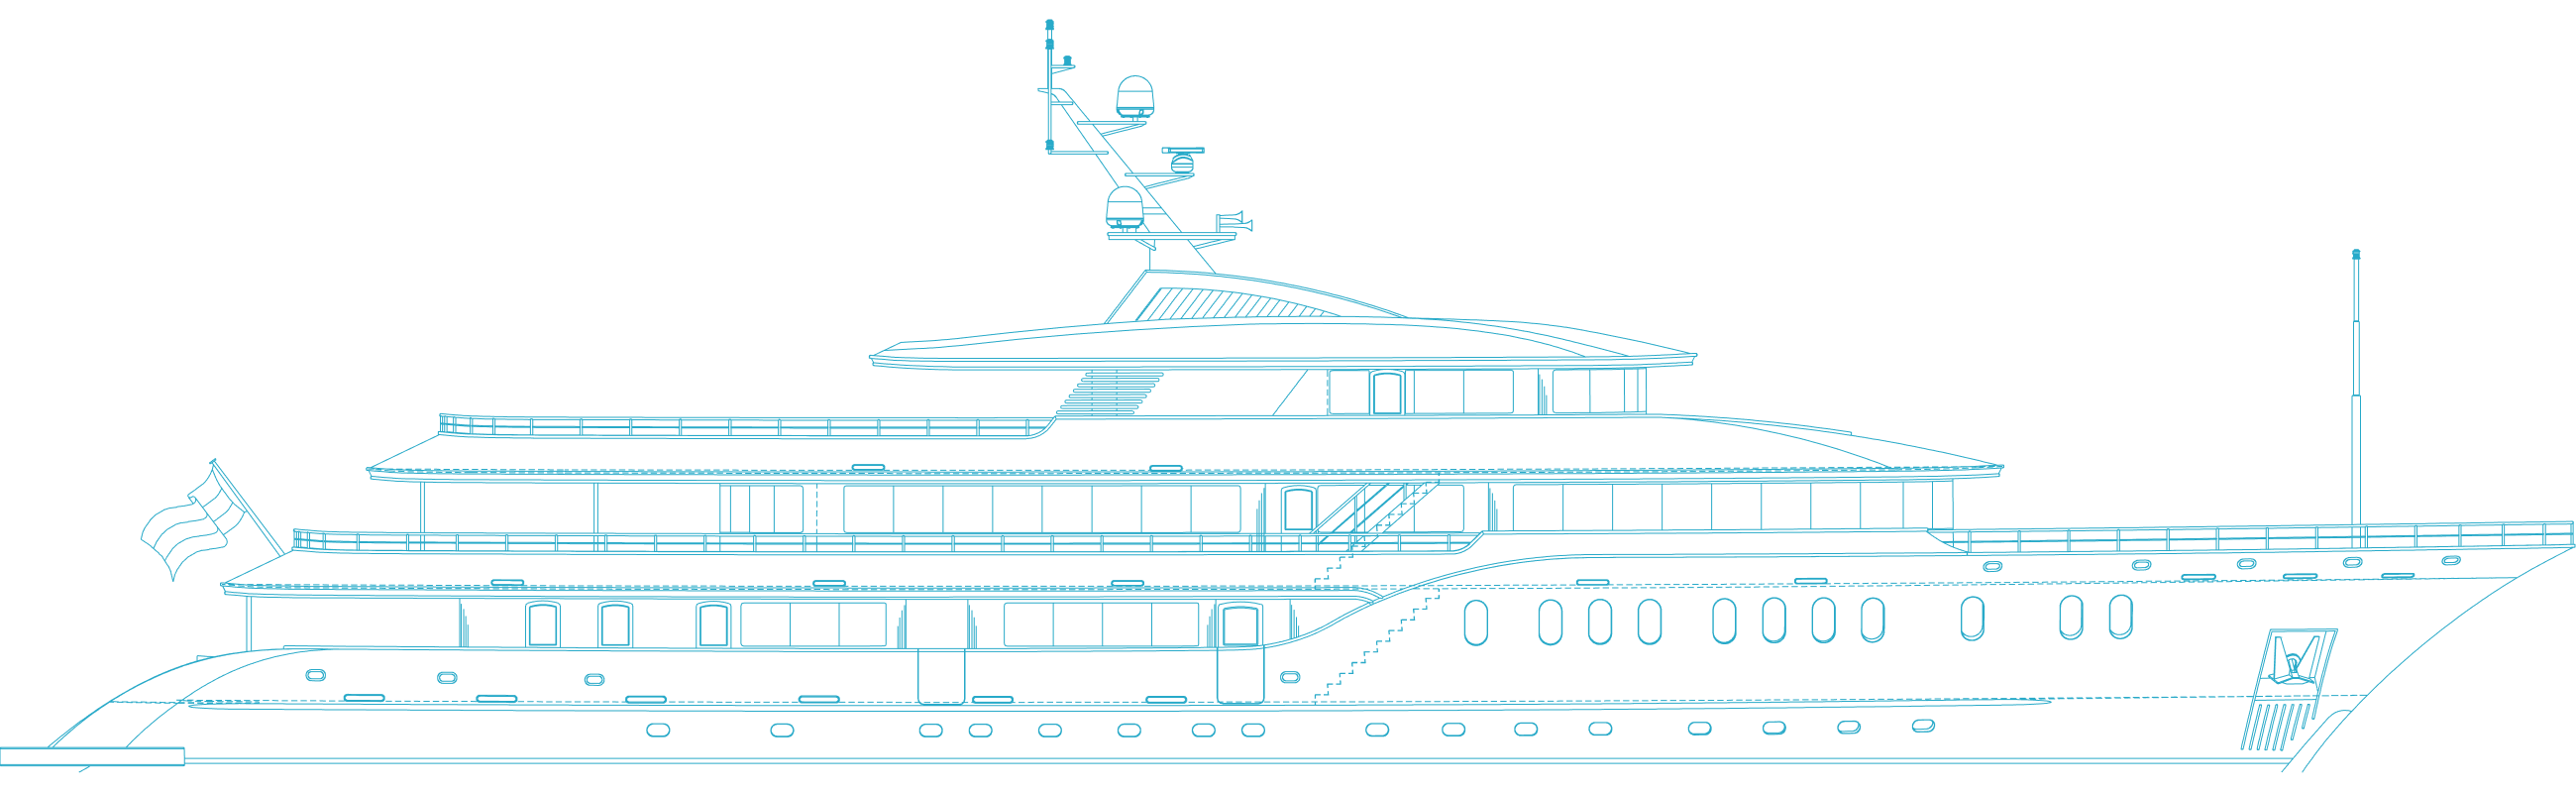 mario yacht